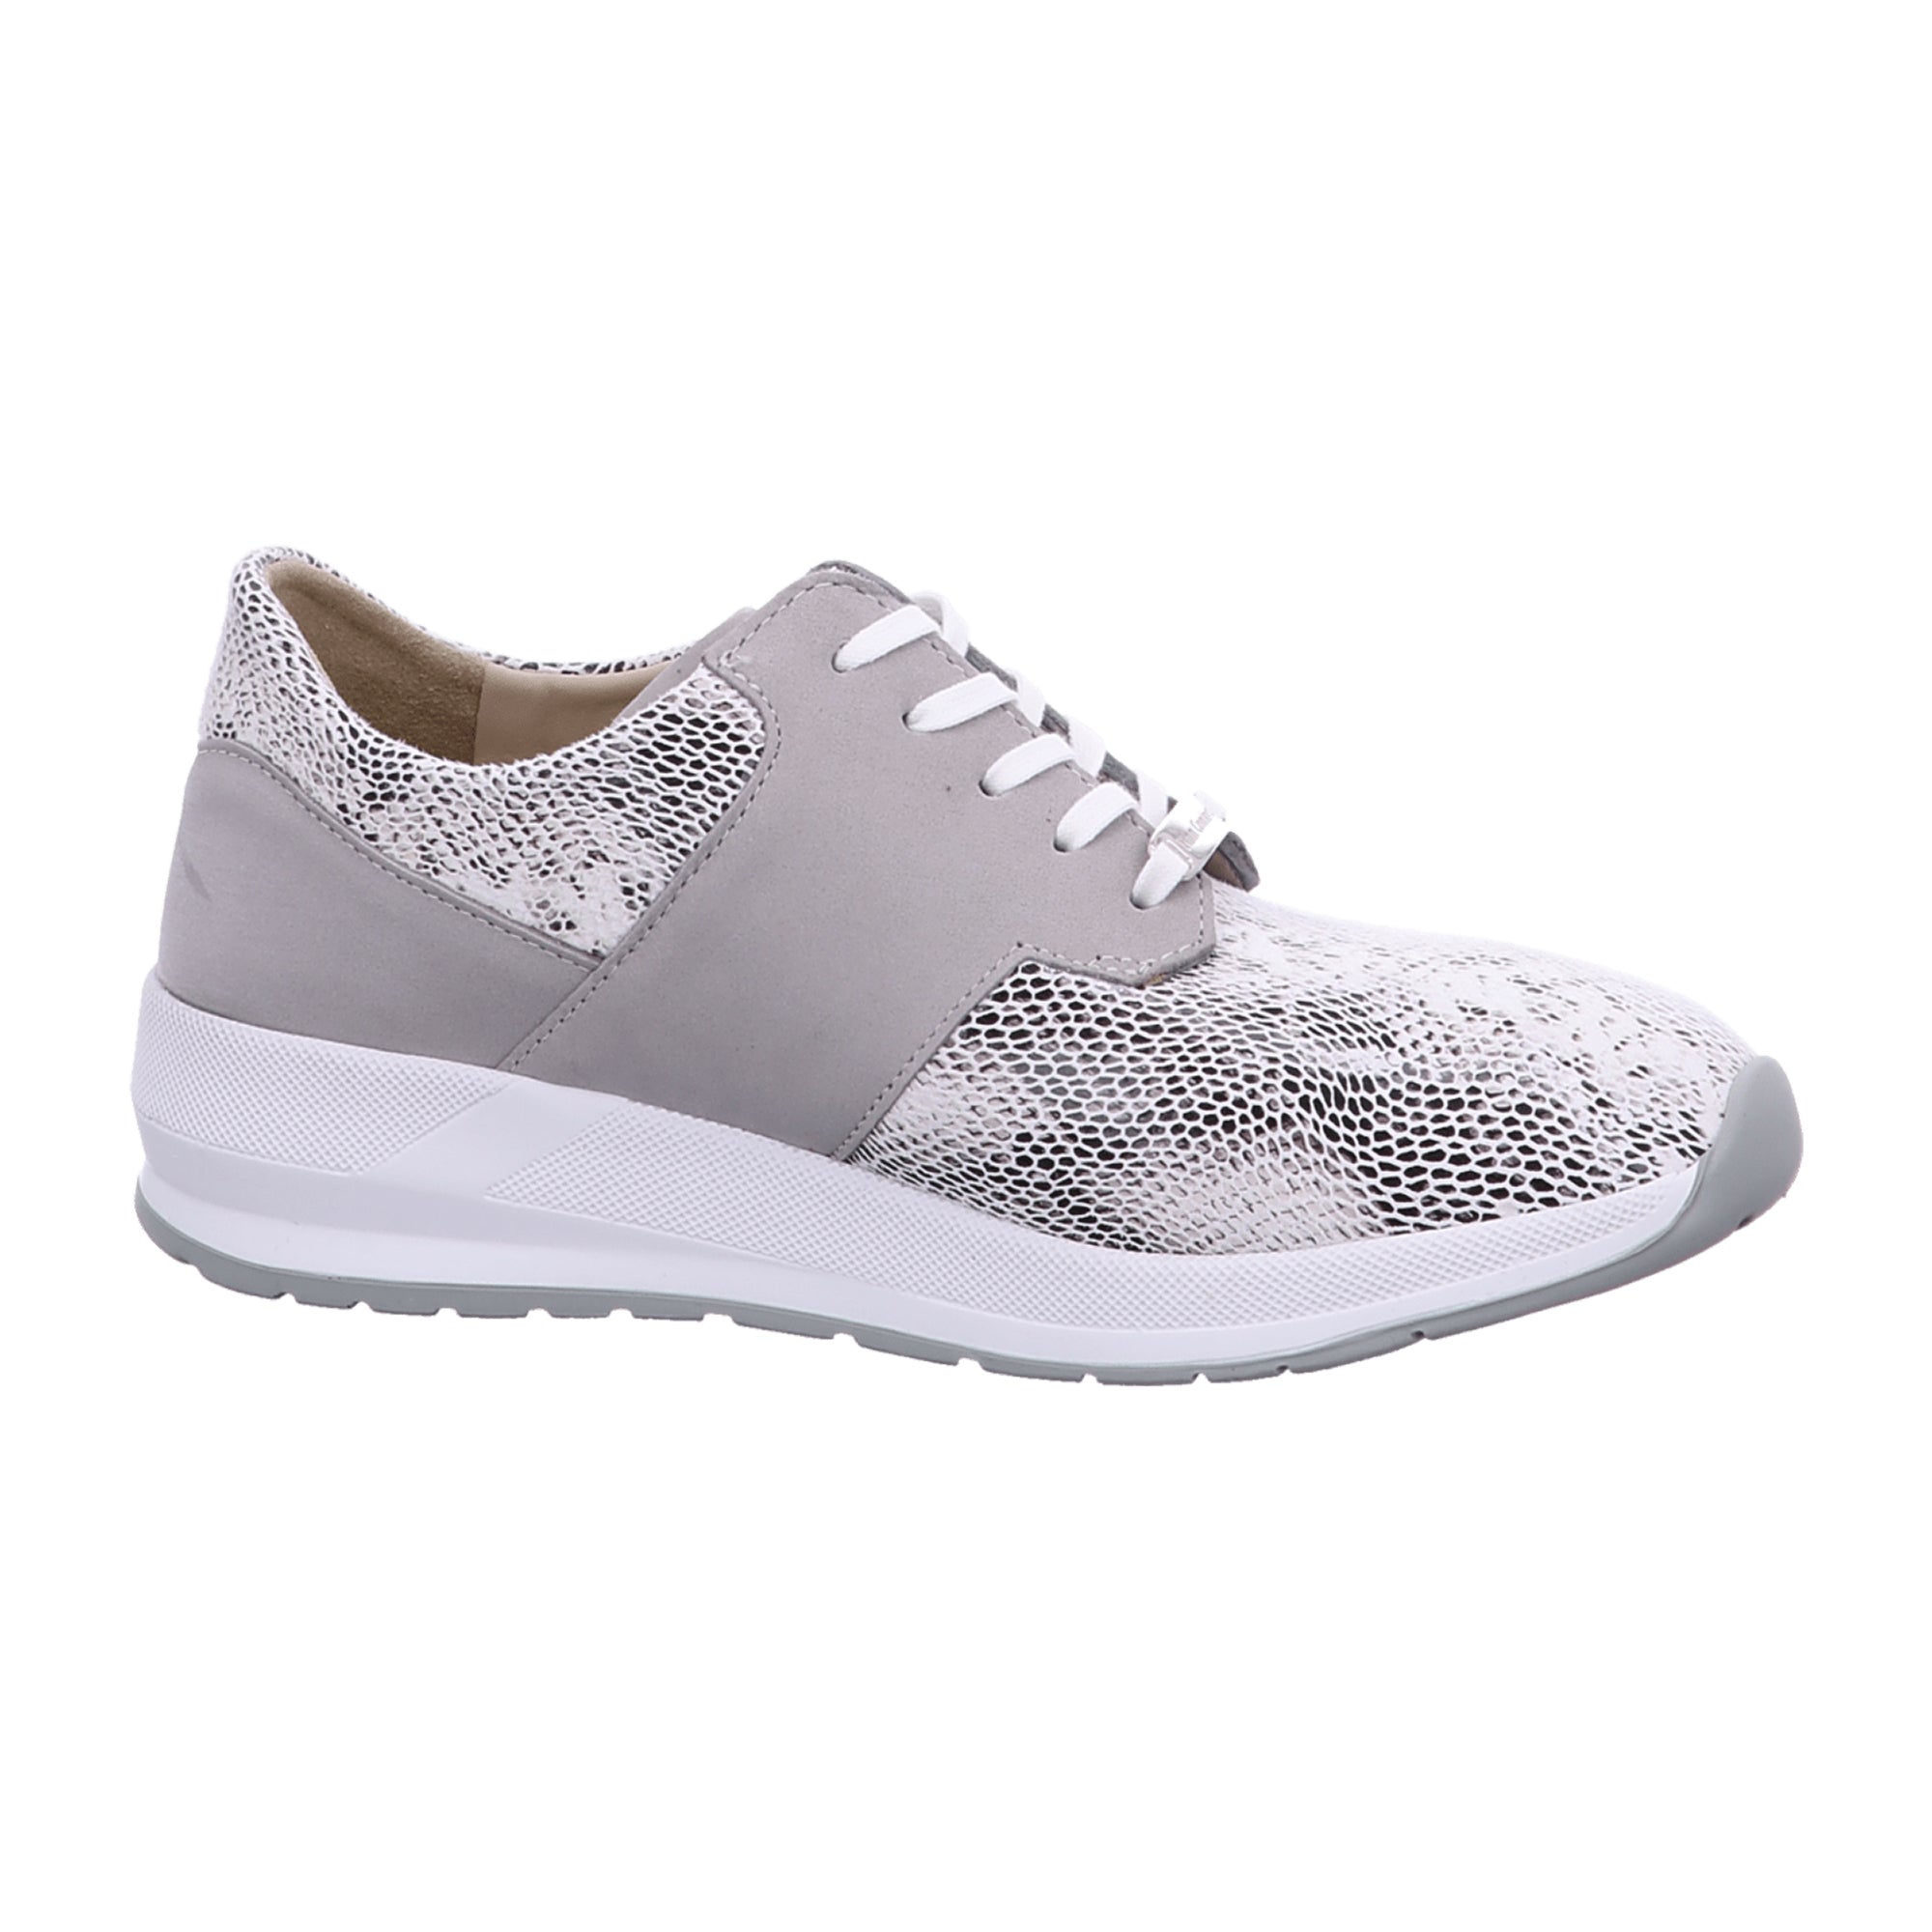 Finn Comfort Caino Women's Comfort Shoes, Stylish Grey